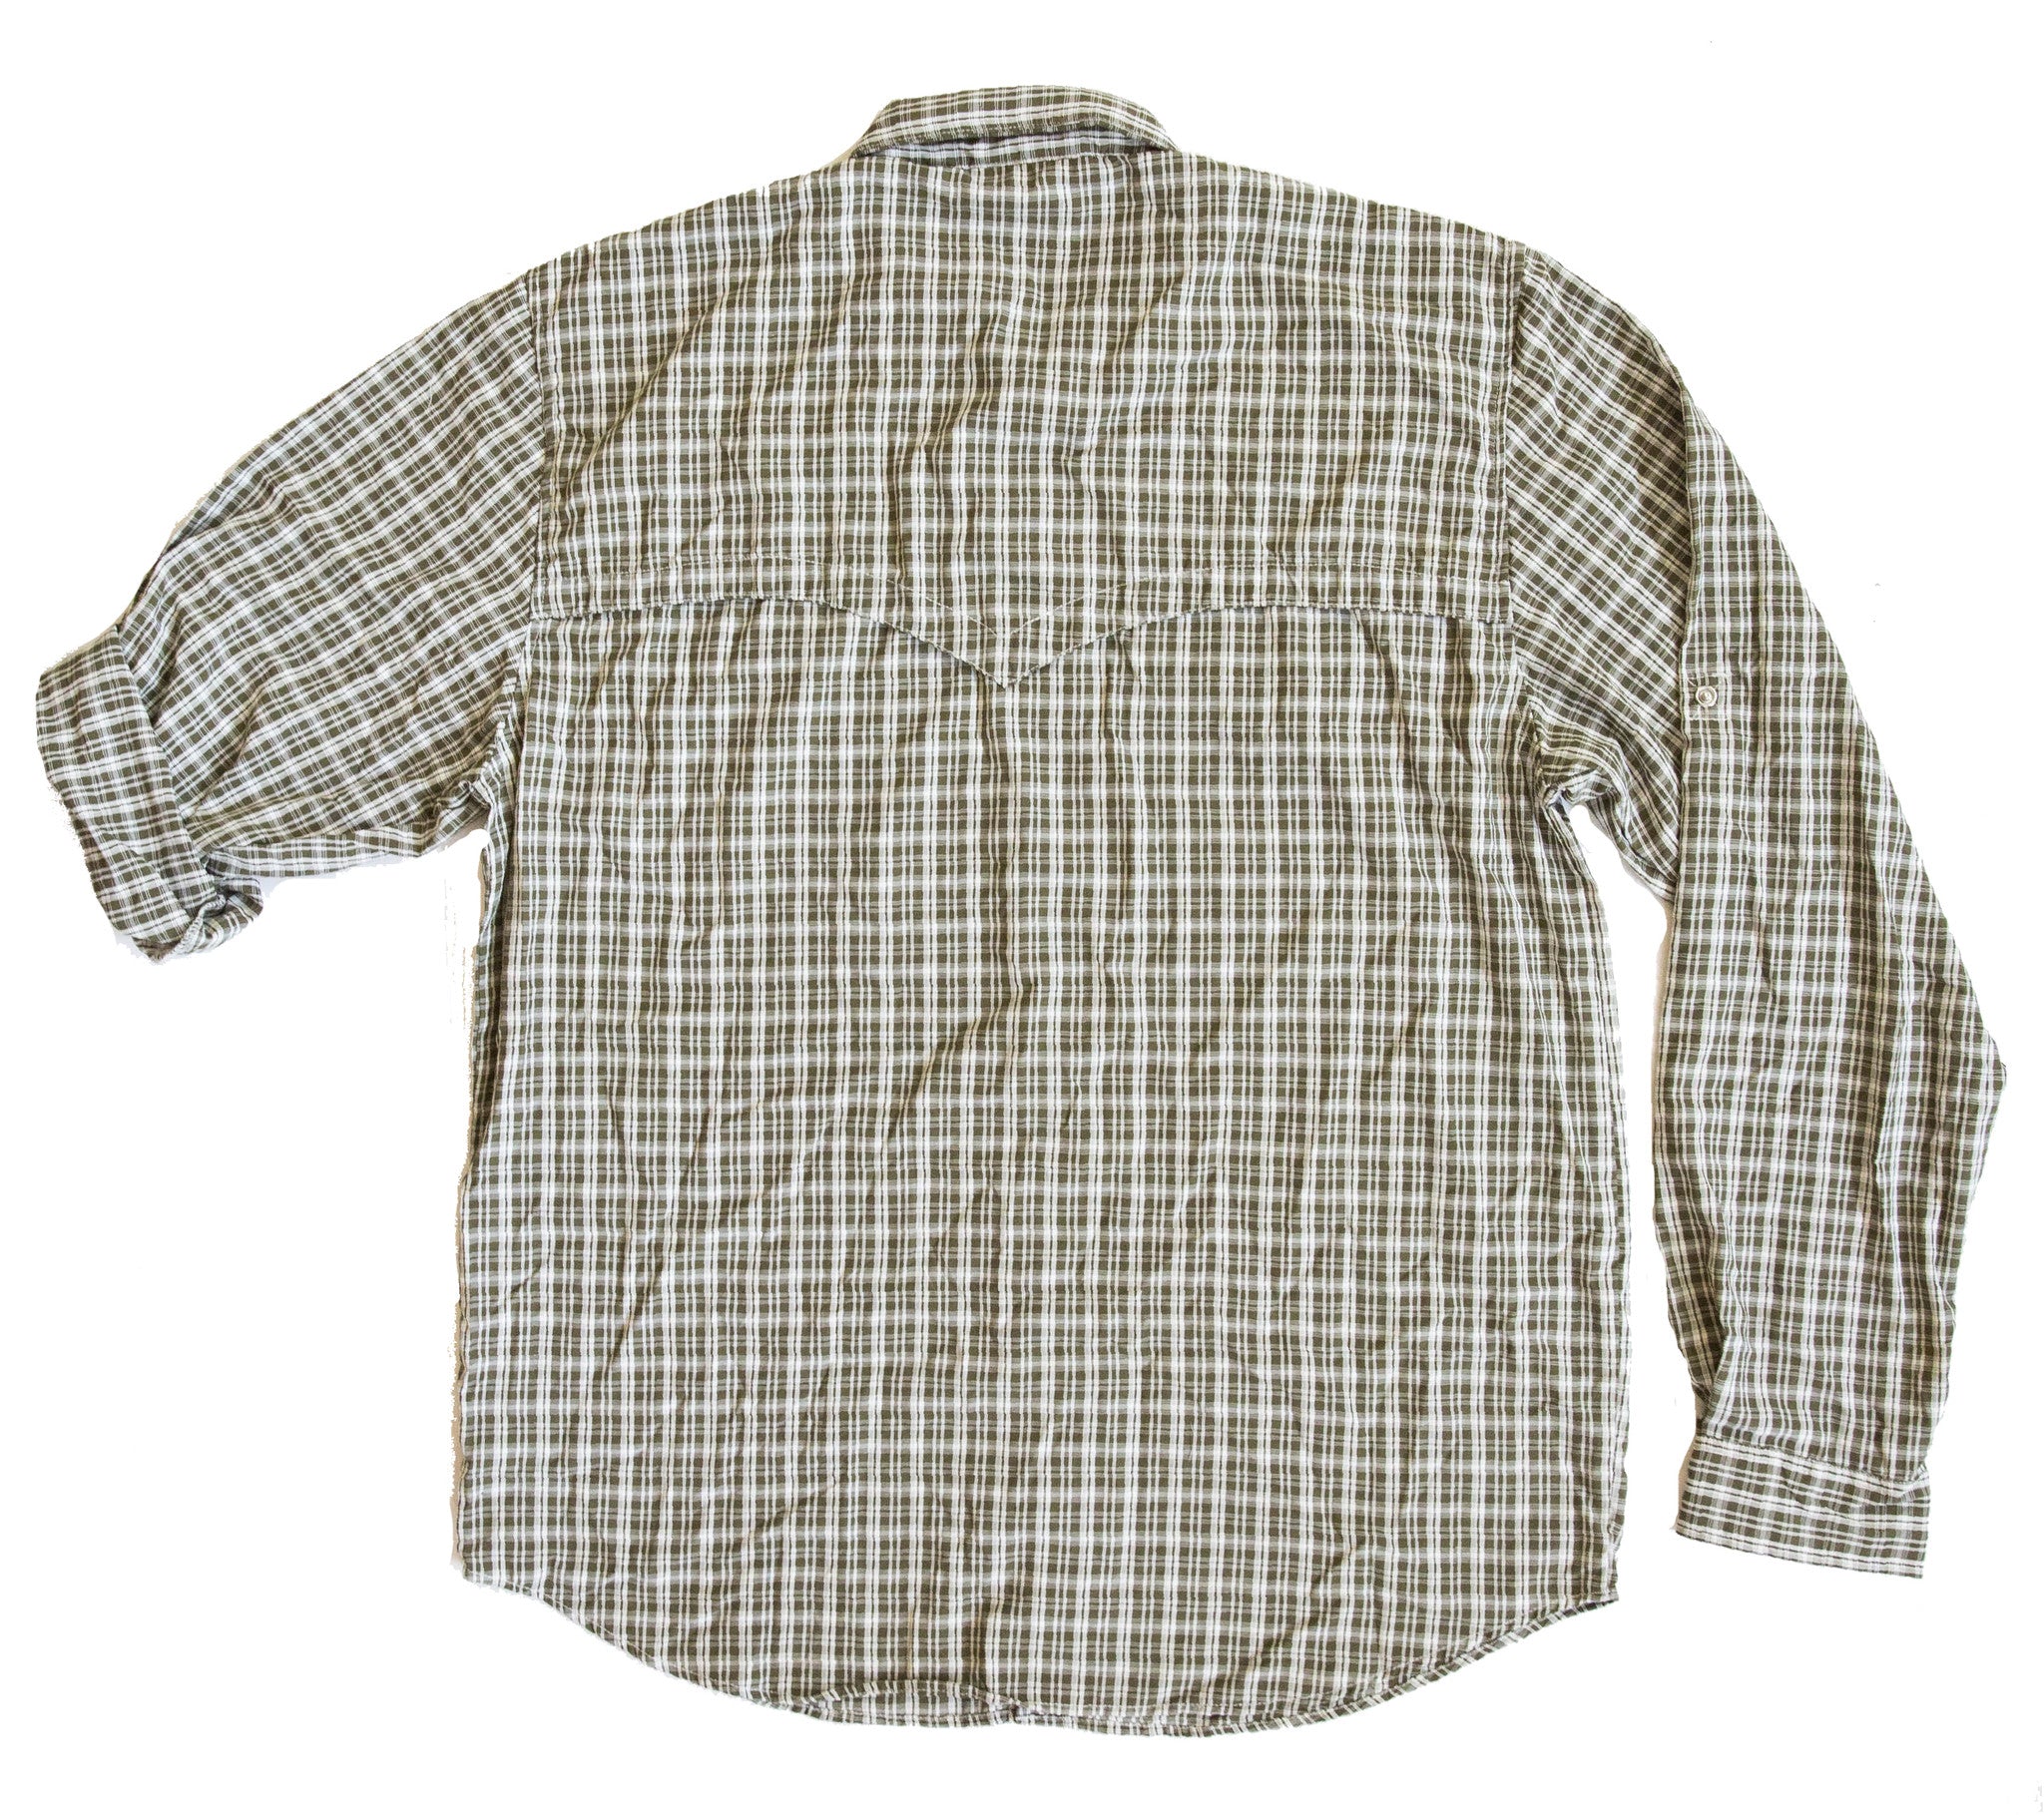 Cache Creek Fishing Shirt - Spruce Plaid Long Sleeve